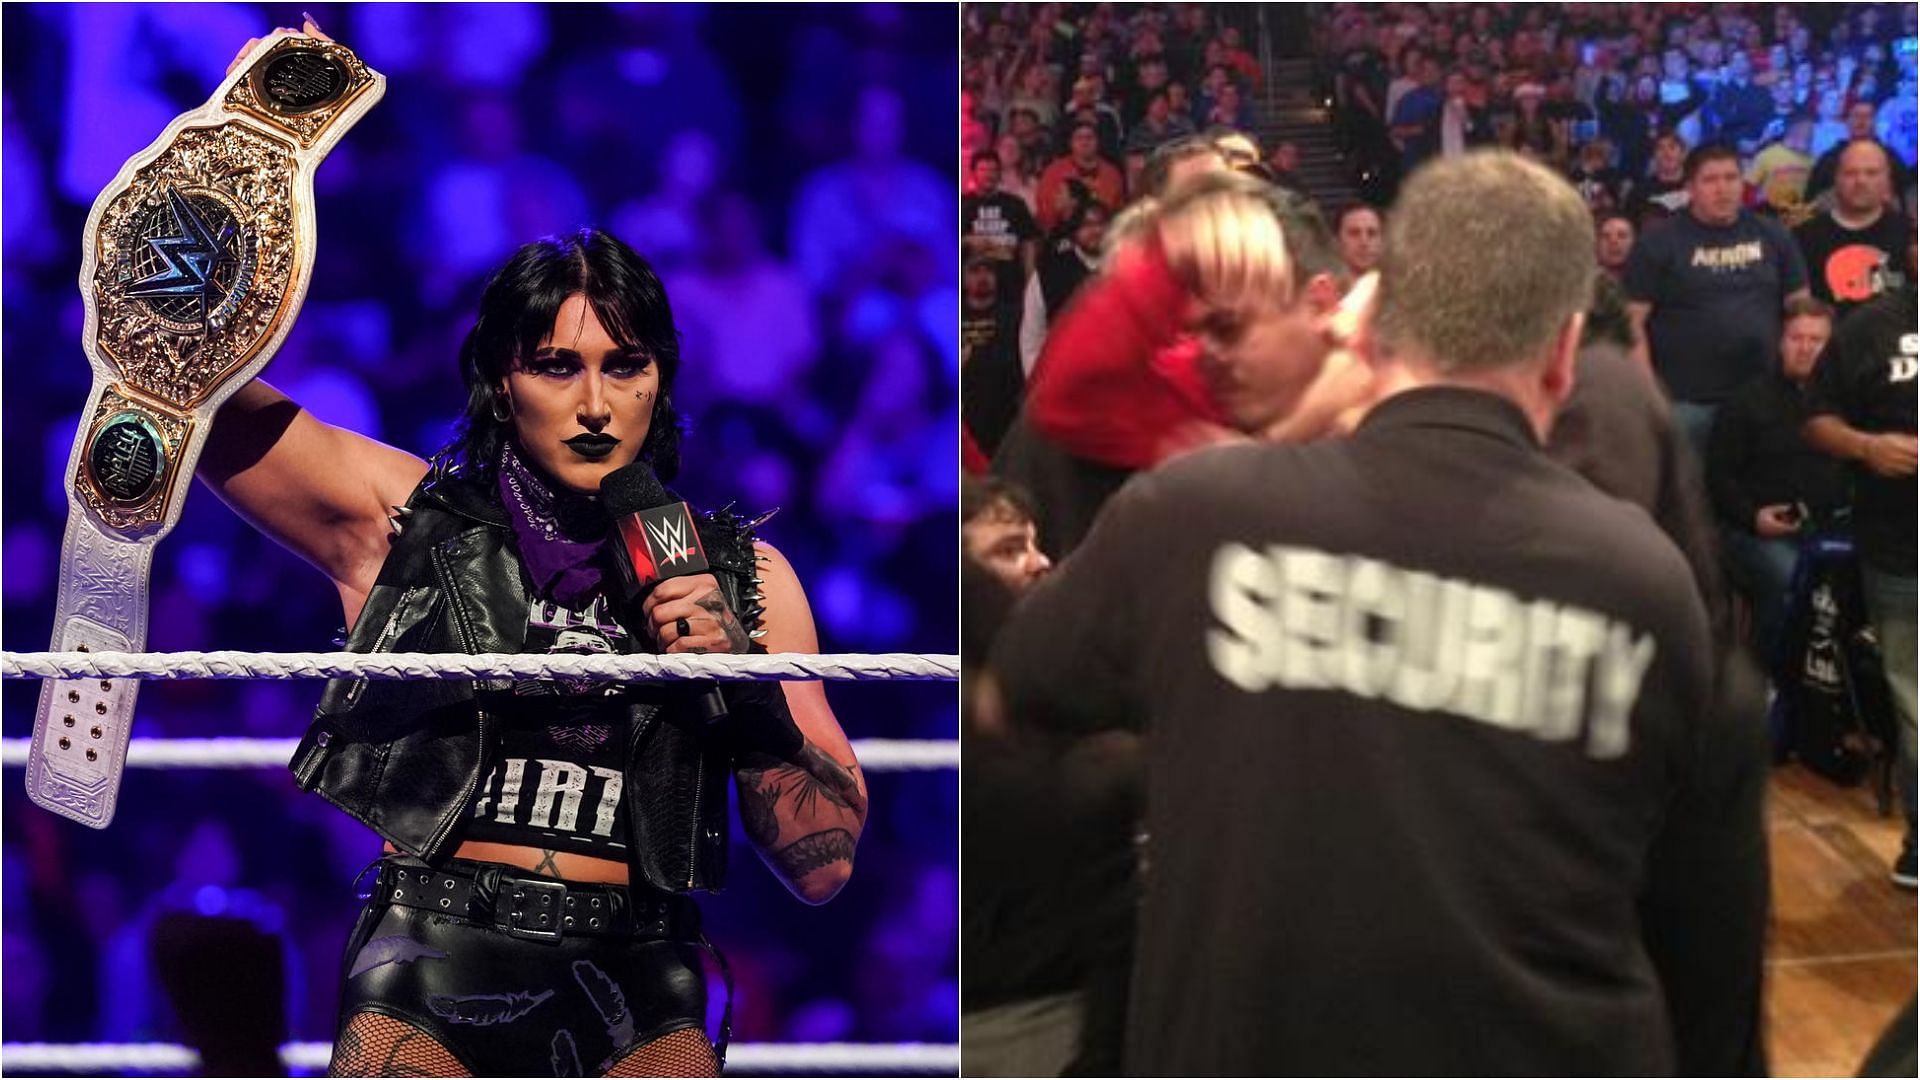 WWE security took away a fan during Rhea Ripley